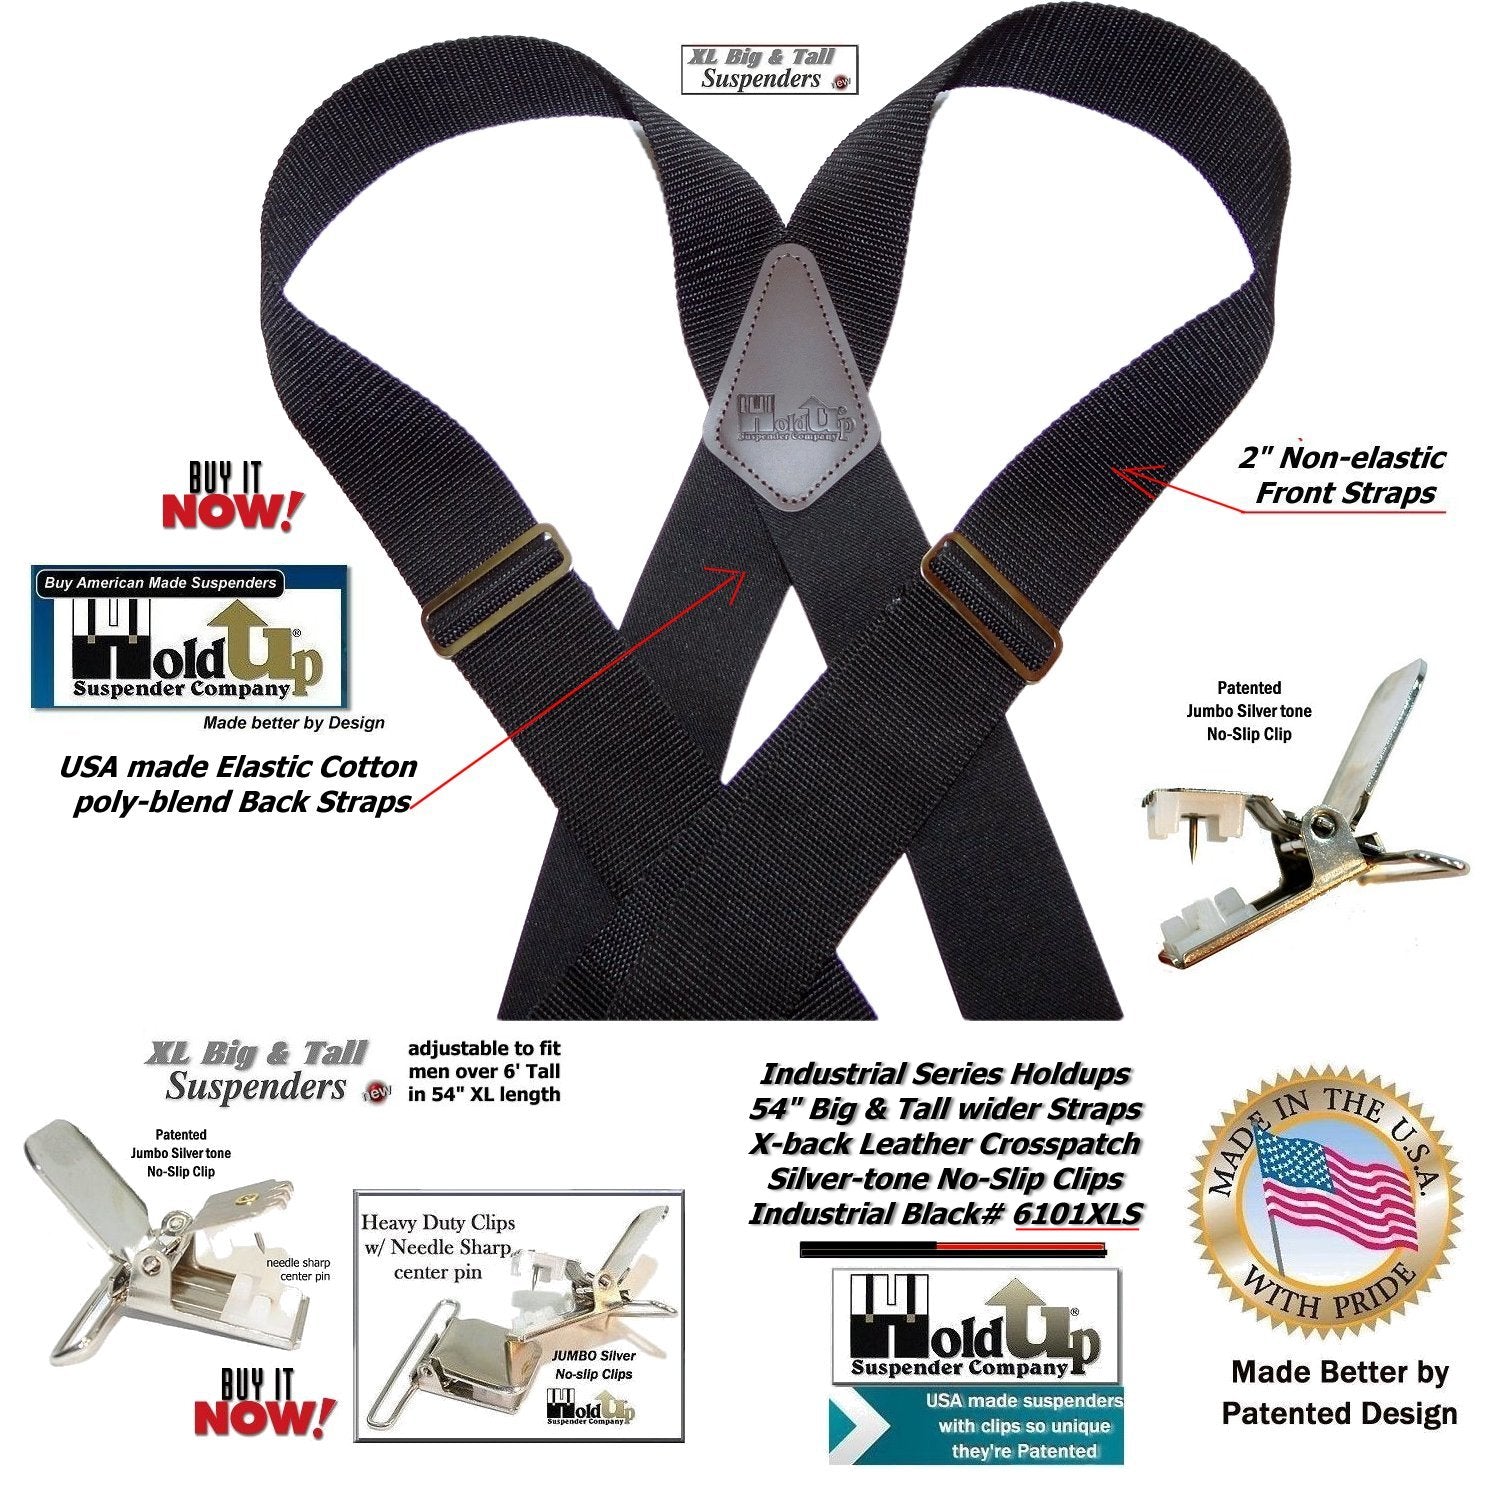 20) Hold-Up Suspenders Heavy Duty JUMBO Nickel Plated Metal No-Slip Clips